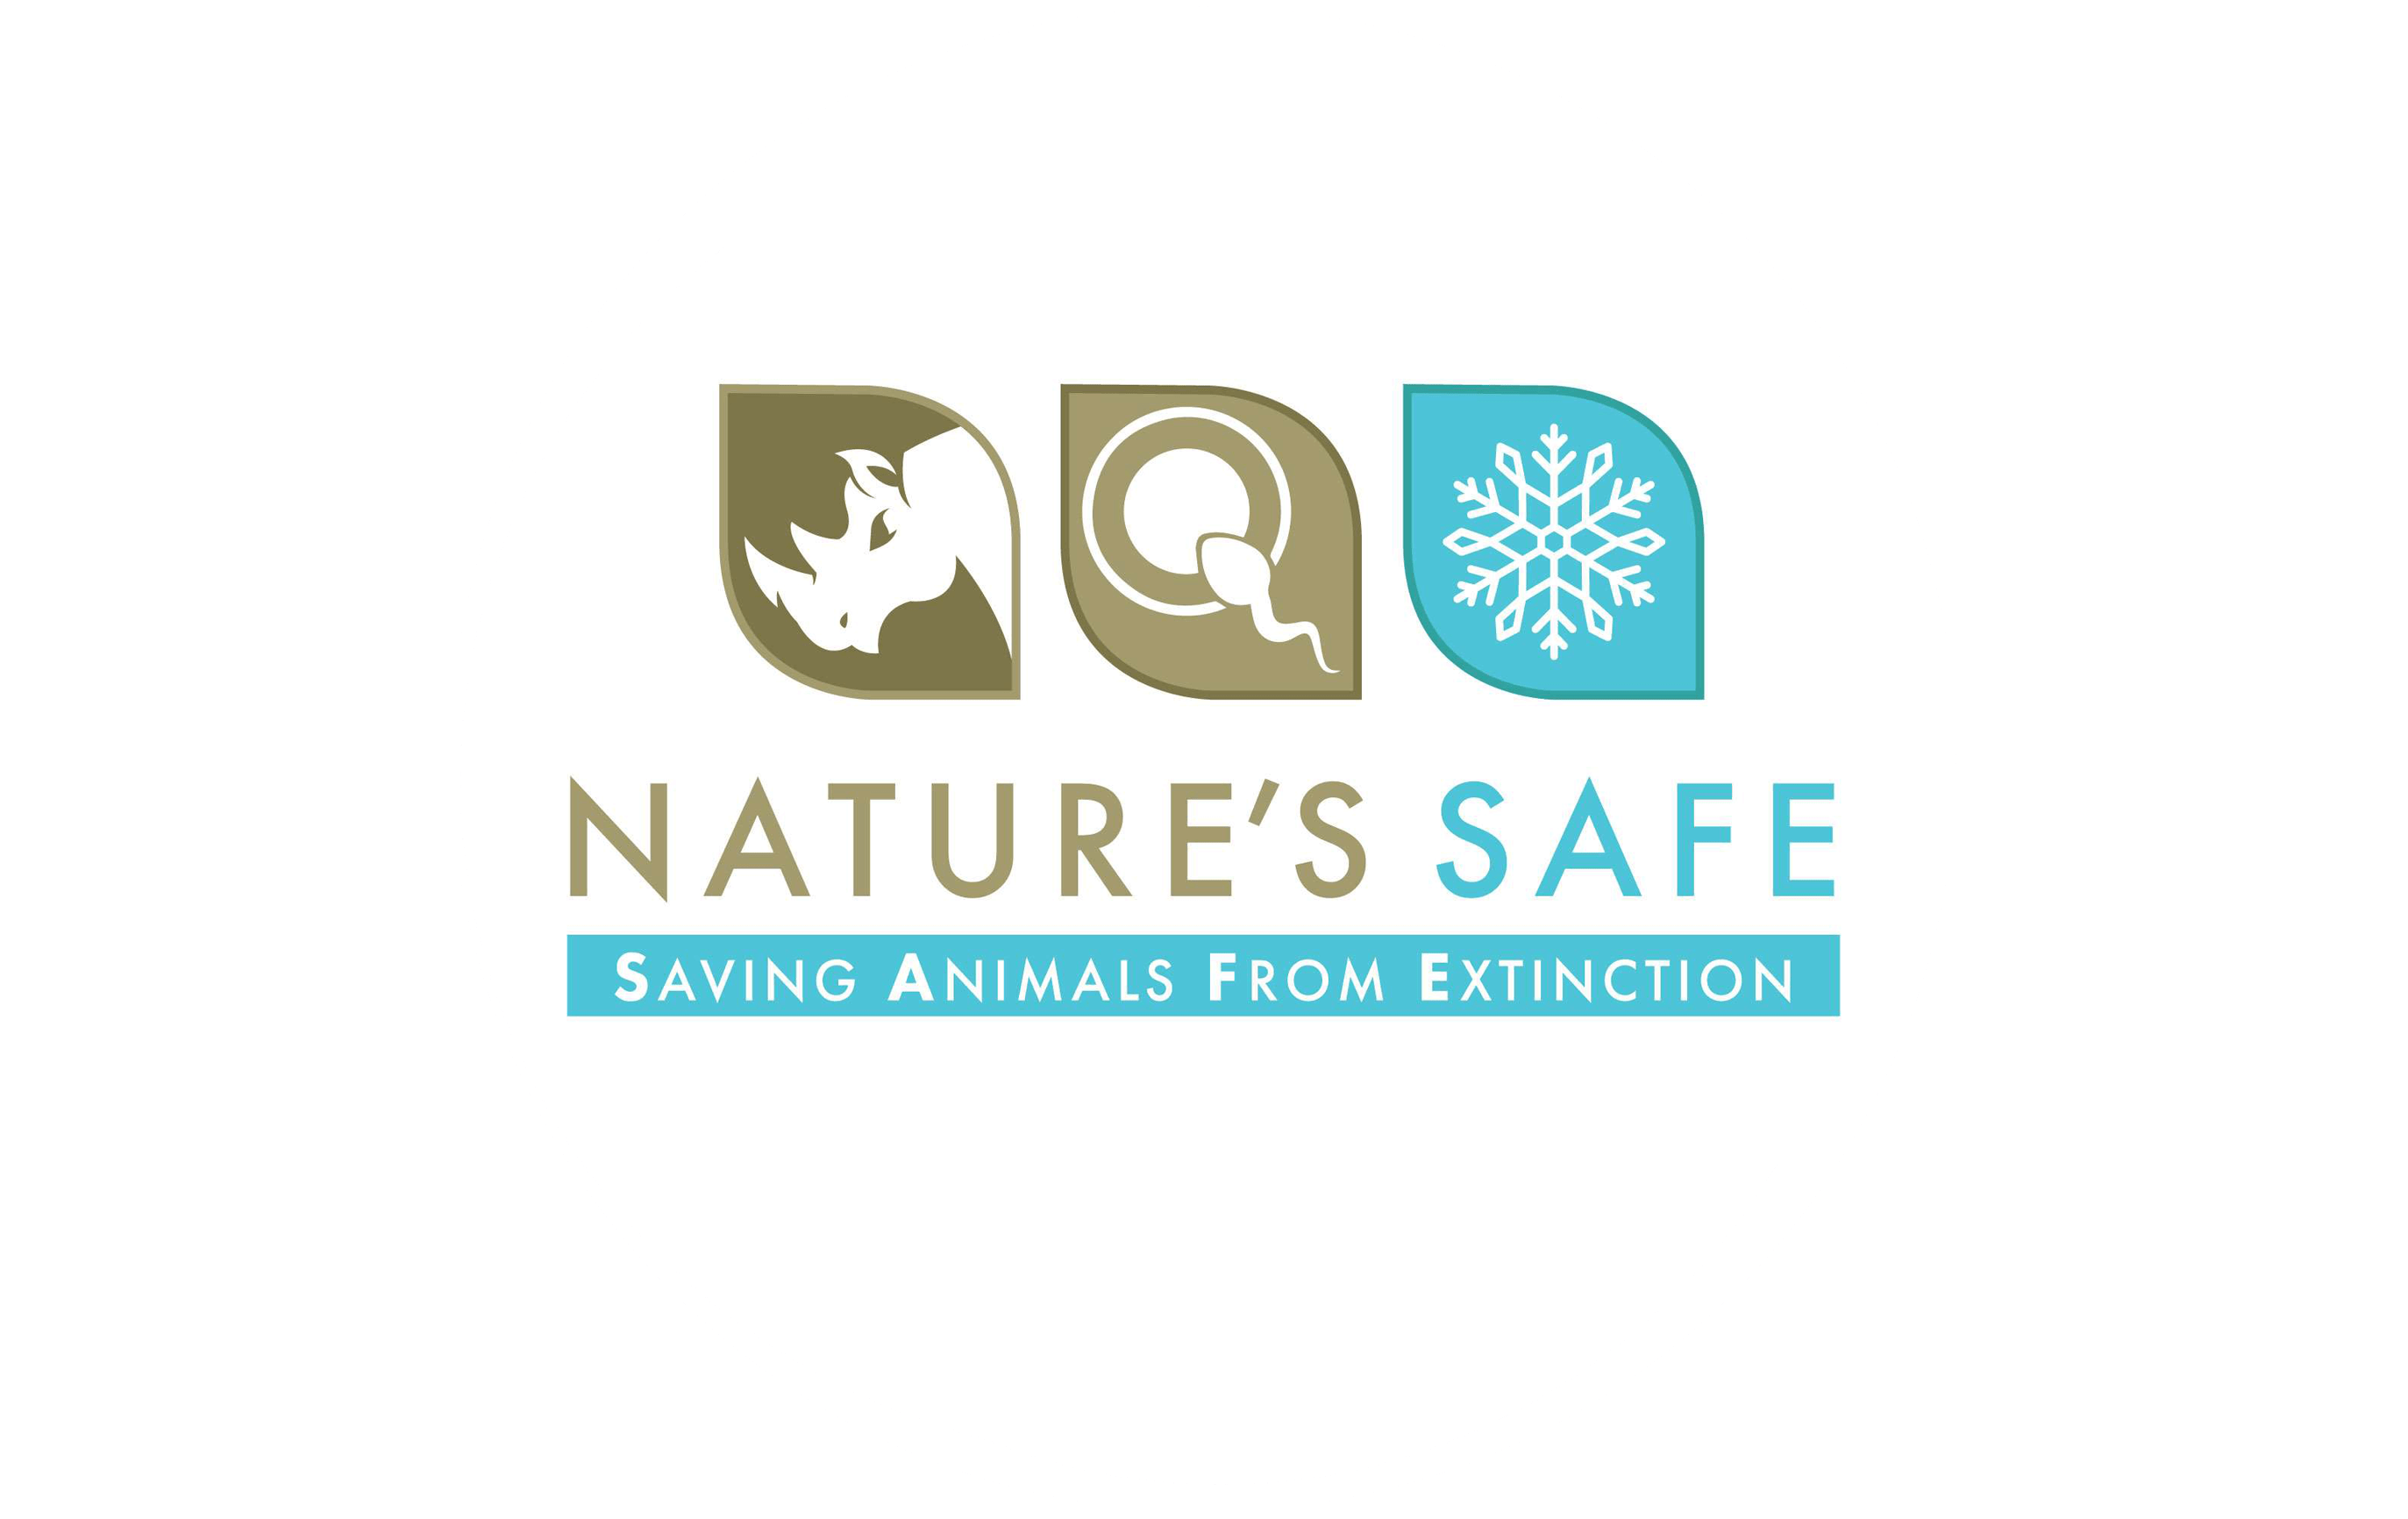 Nature’s SAFE